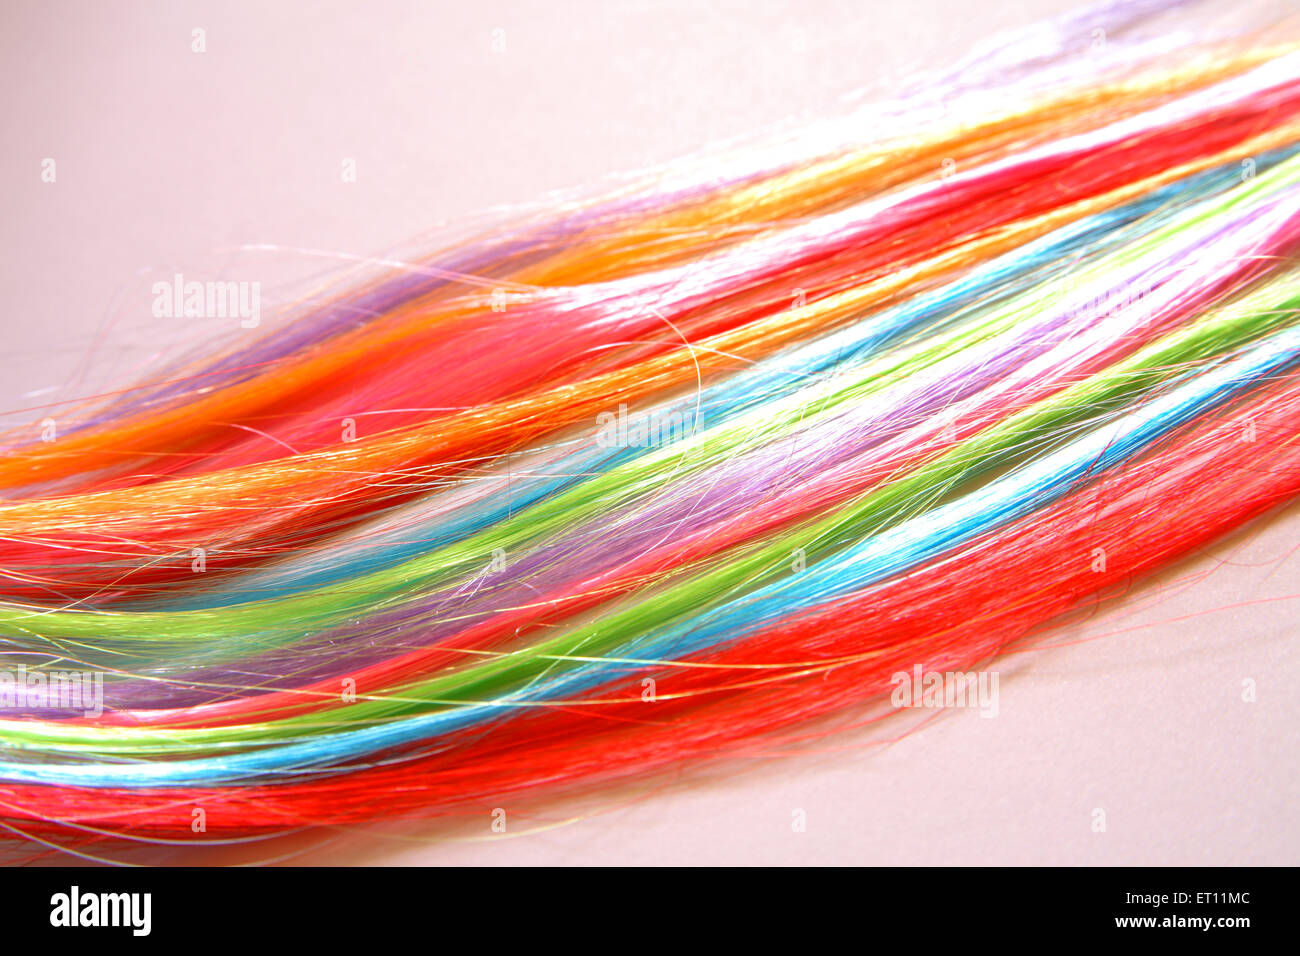 Colorido cabello artificial hecha de plástico suave Foto de stock